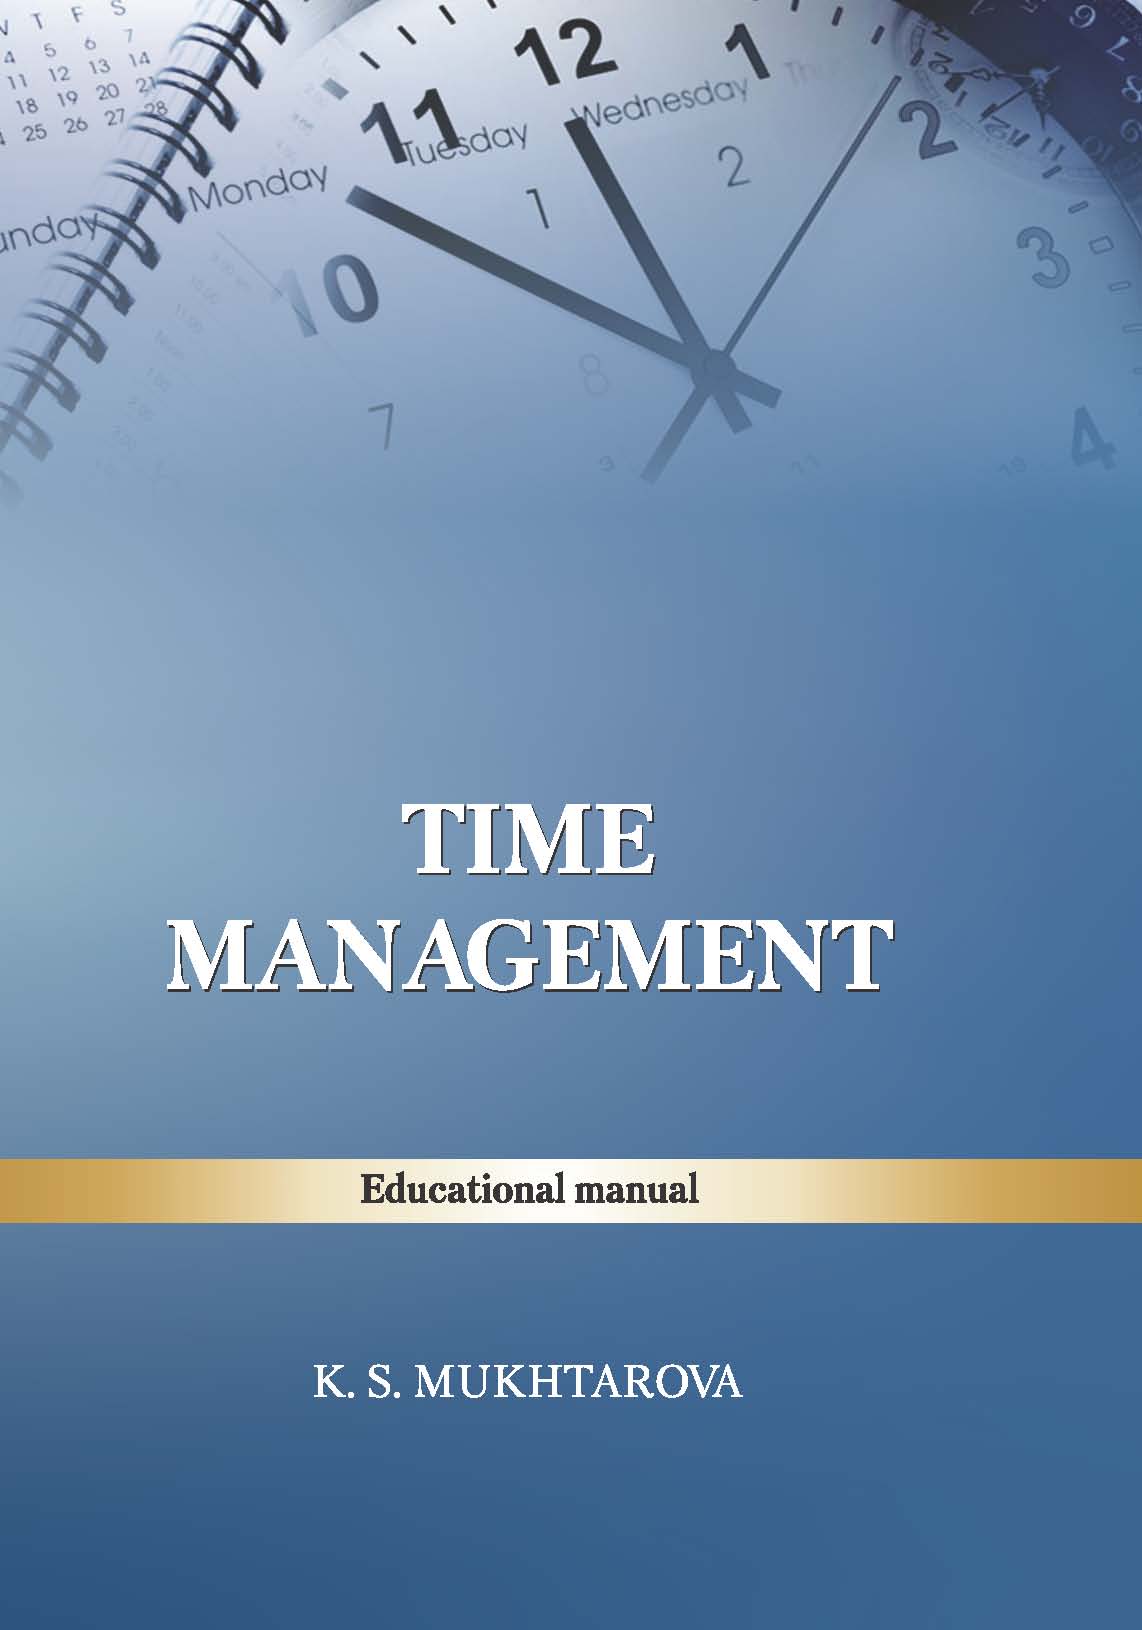 Time Management: educational manual – 82 p.